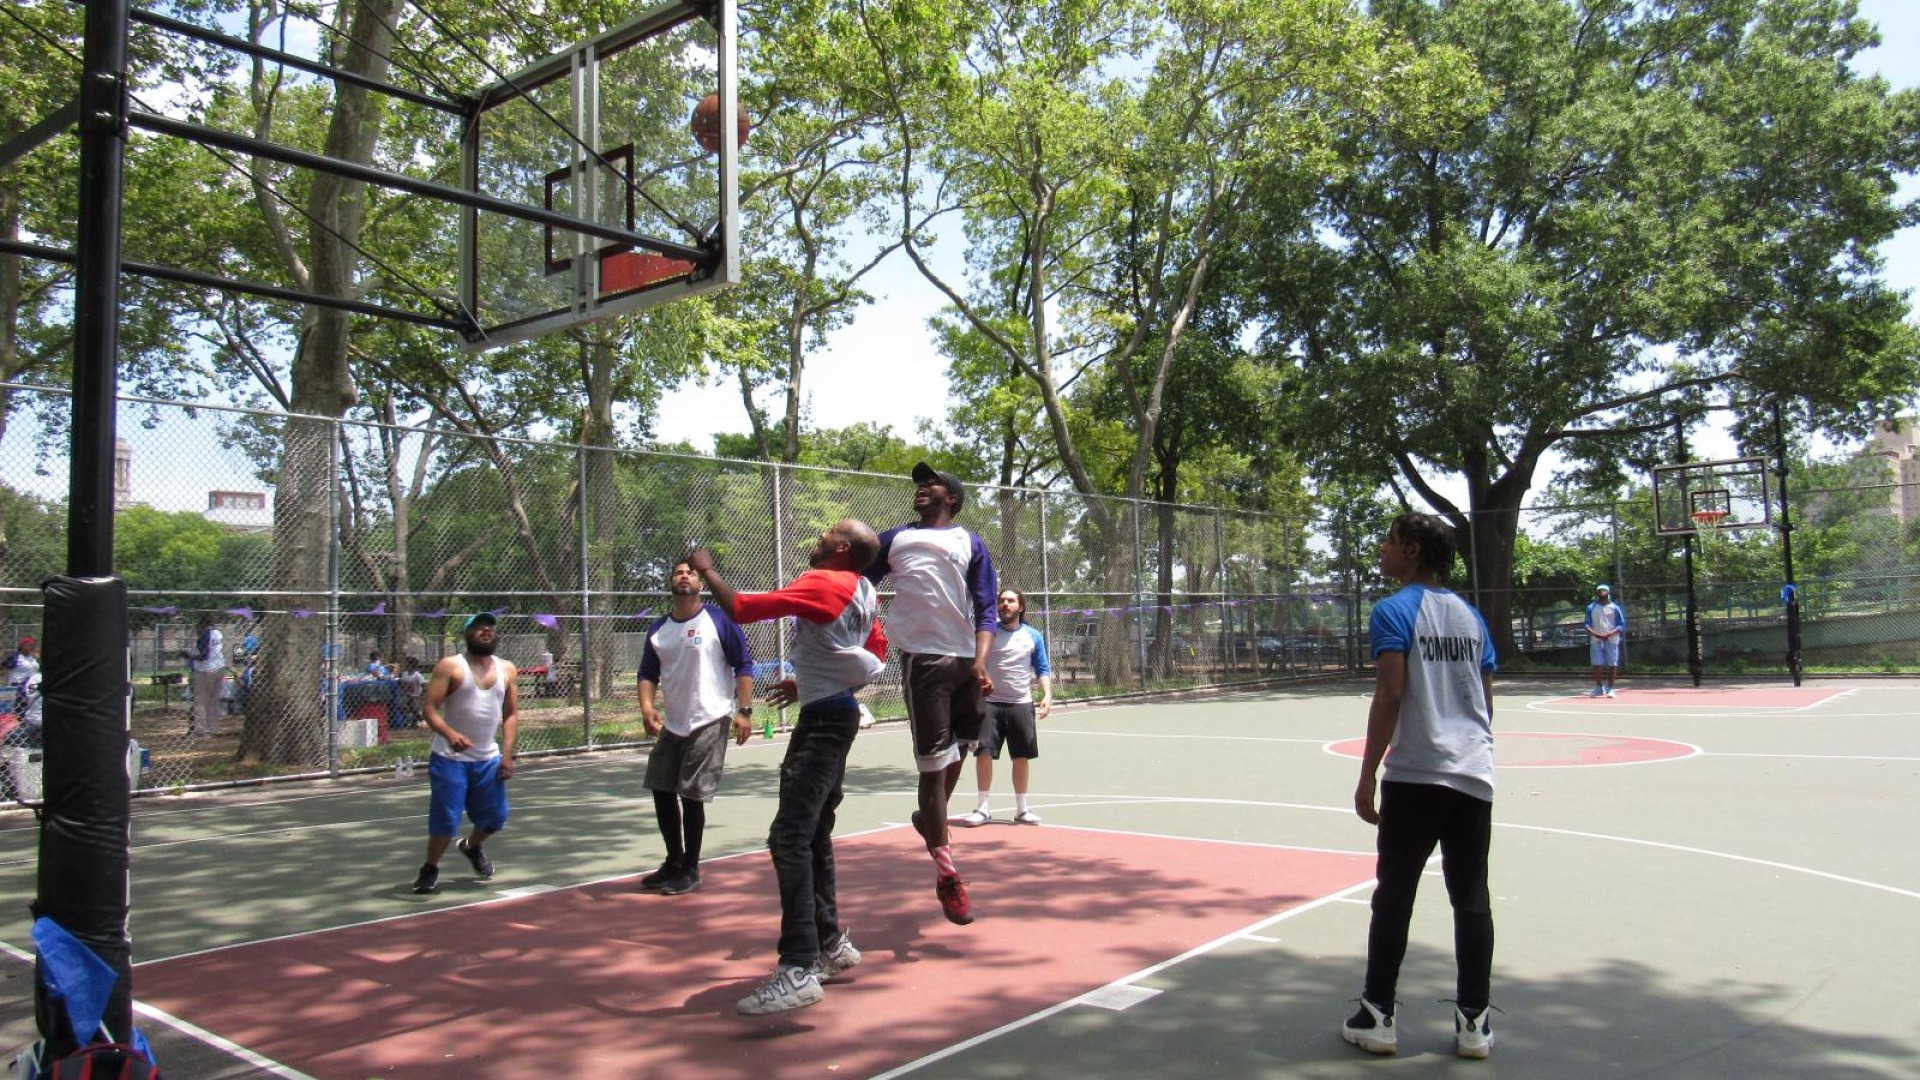 Chaz and community playing softball, and basketball